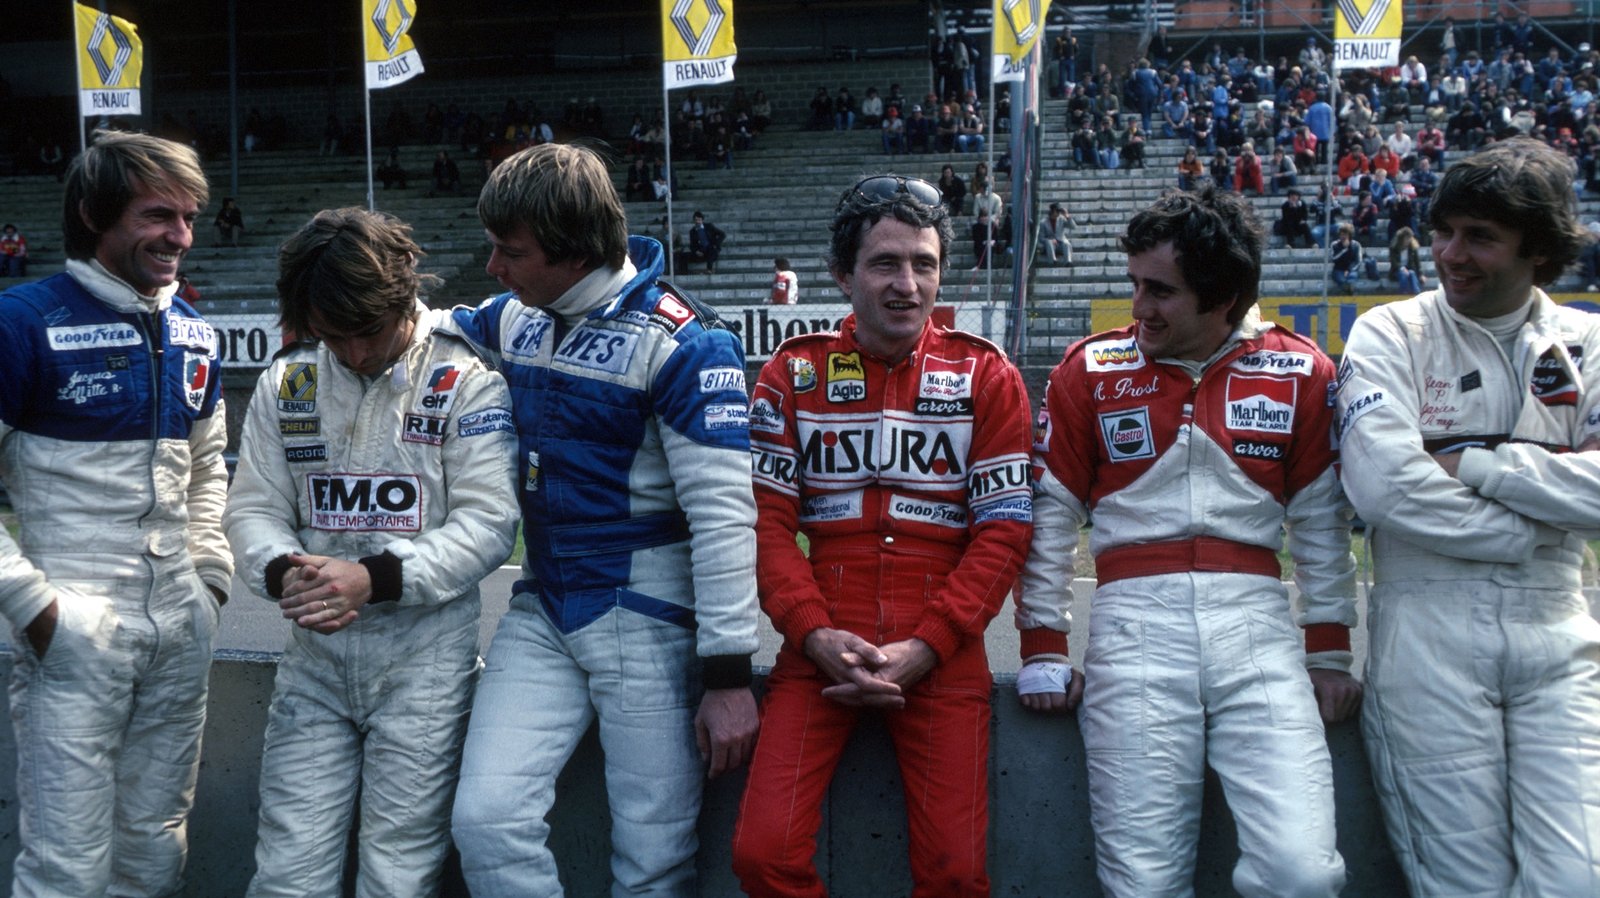 Image - Jacques Laffite Rene Arnoux Didier Pironi Patrick Depailler Alain Prost Jean-Pierre Jarier at Zolder